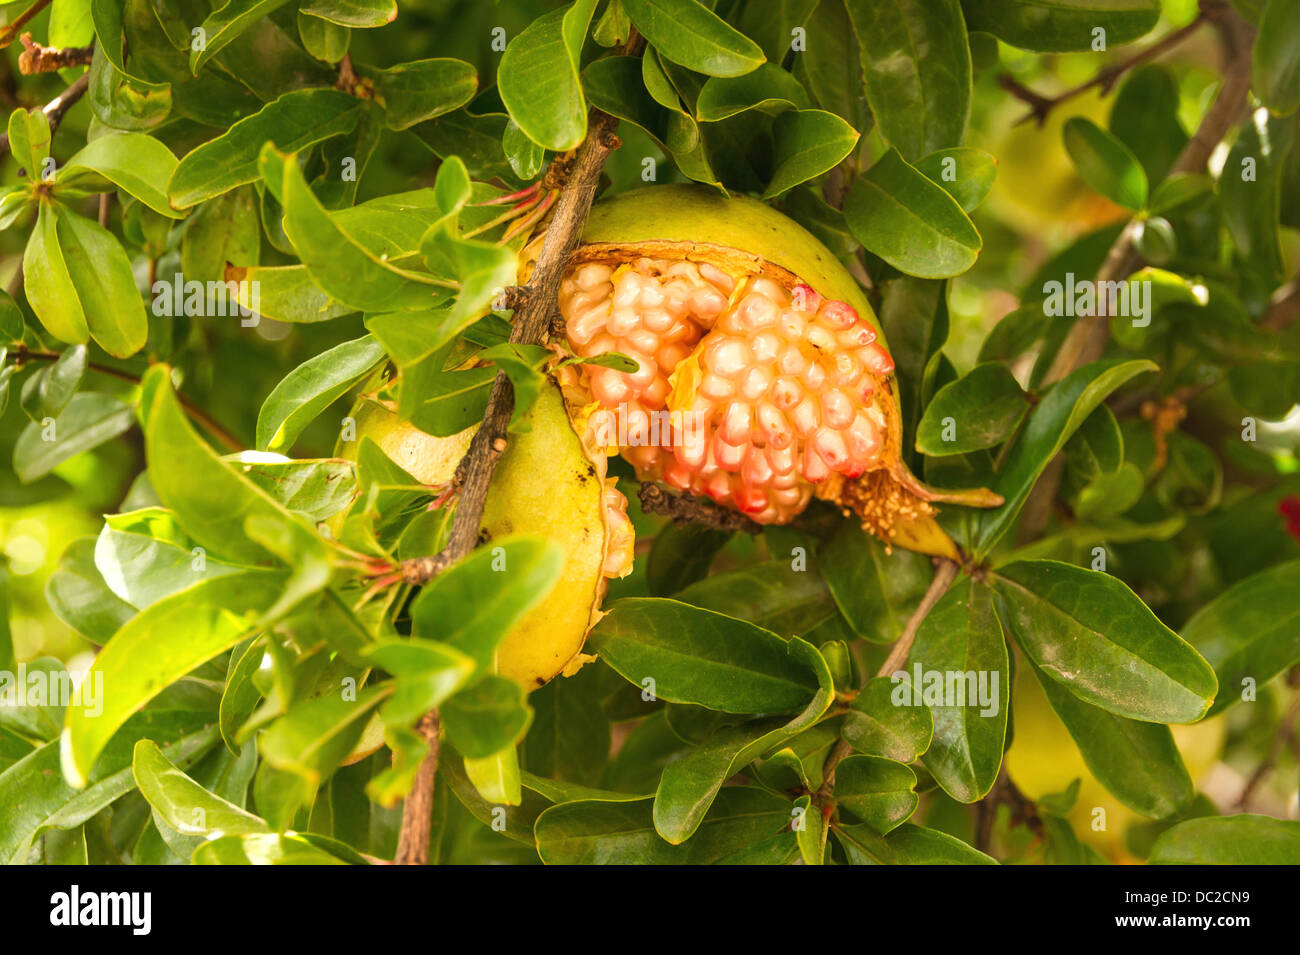 pomegranate opened on the tree (Punica granatum), showing the arils. Granada, Spain. Stock Photo